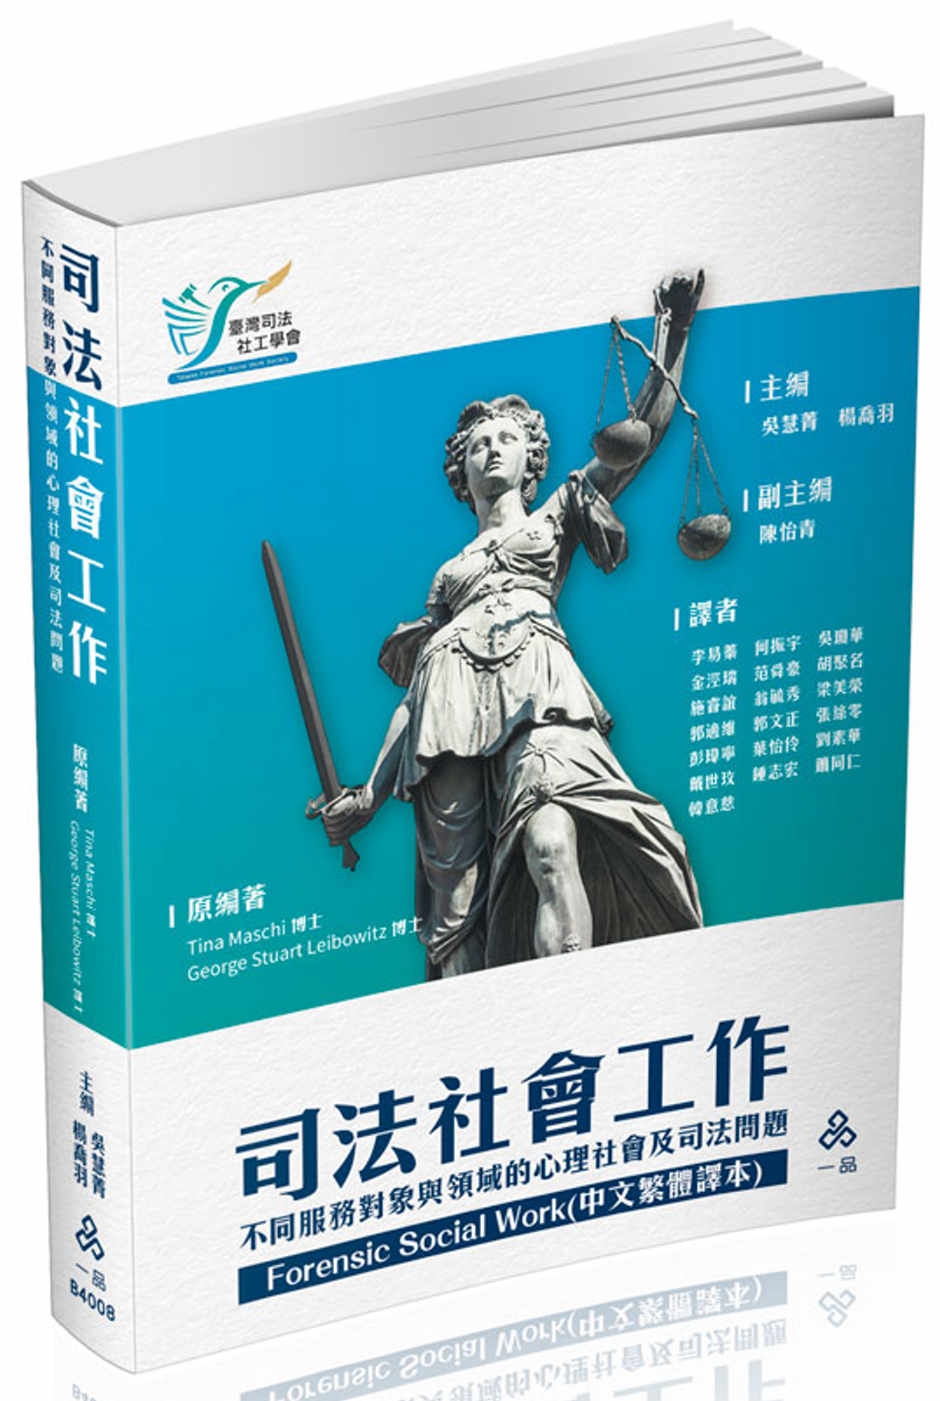 Forensic Social Work(中文繁體譯本)司法社會工作-不同服務對象與領域的心理社會及司法問題(一品)